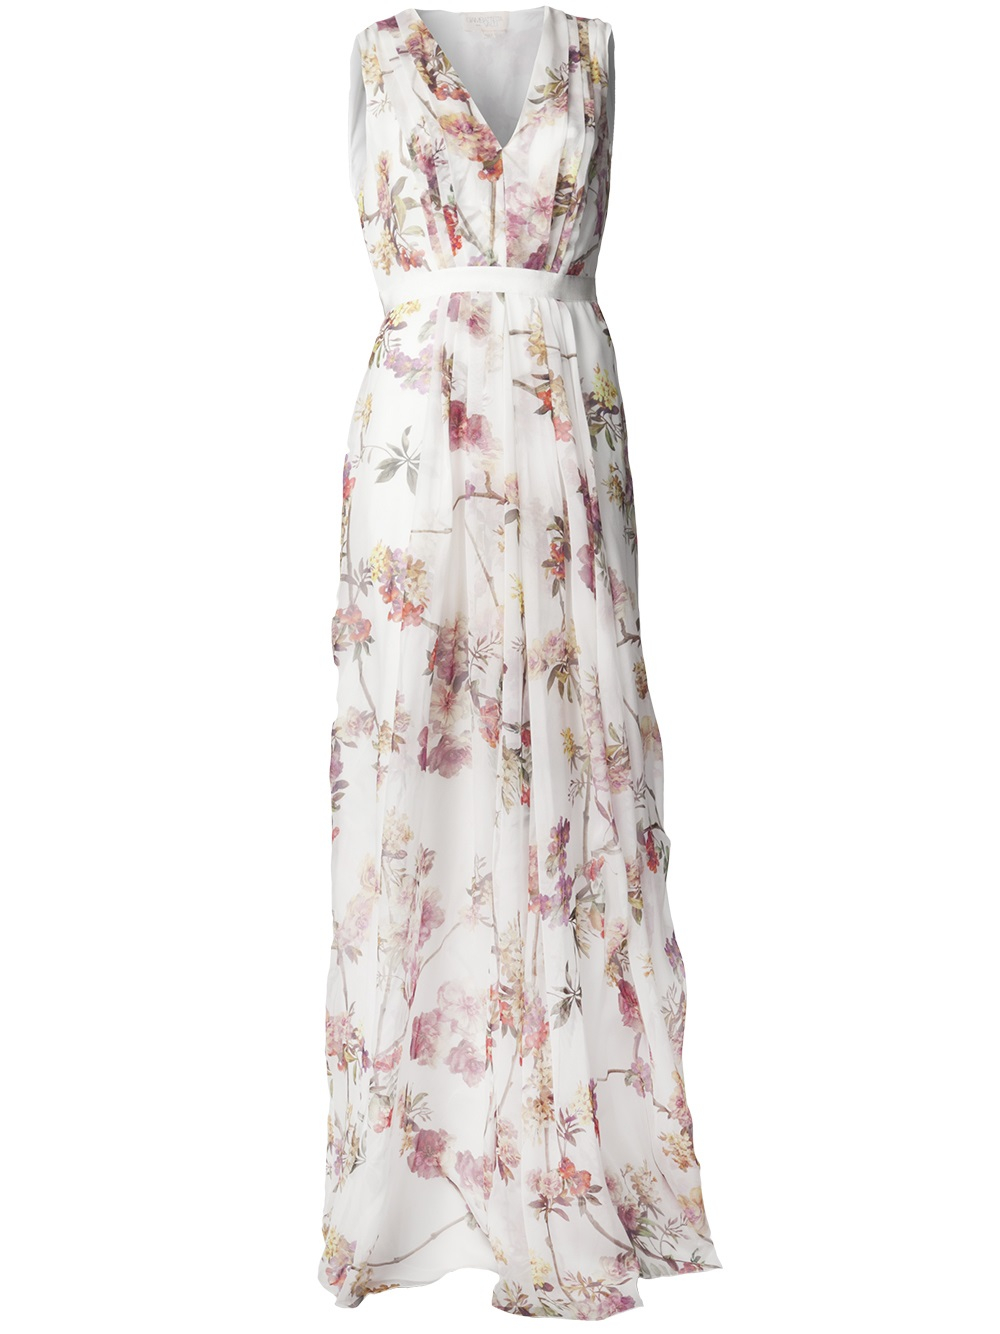 Giambattista Valli Floral Print Pleated Dress in White - Lyst